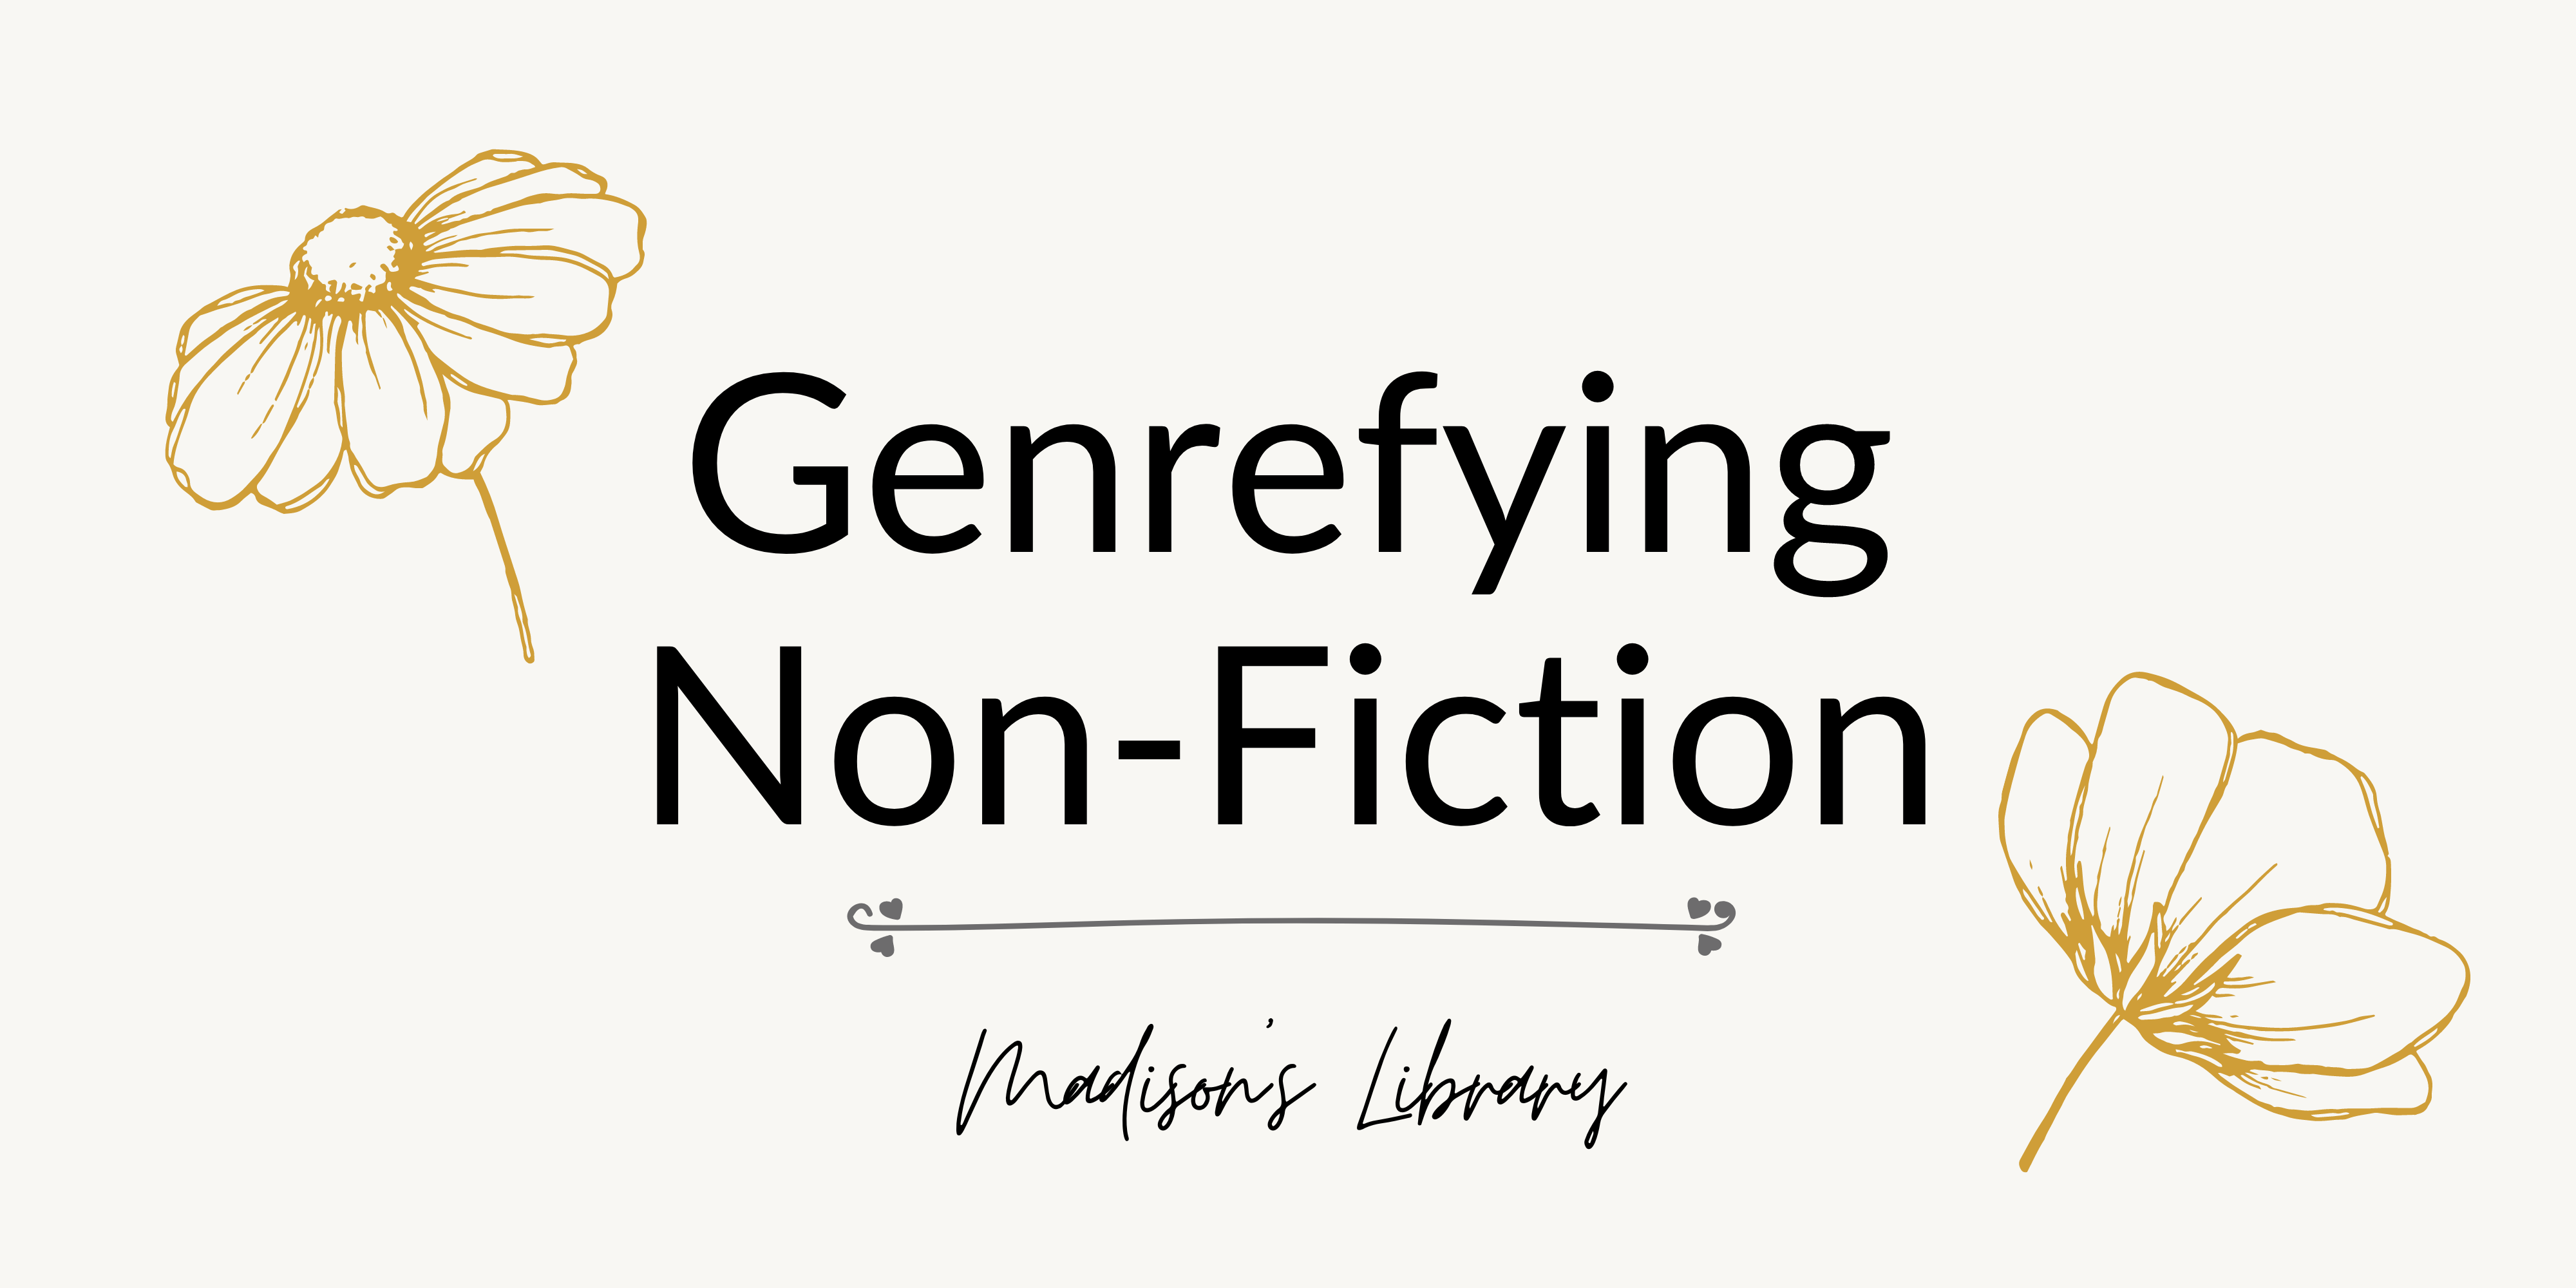 Genrefying Non-Fiction